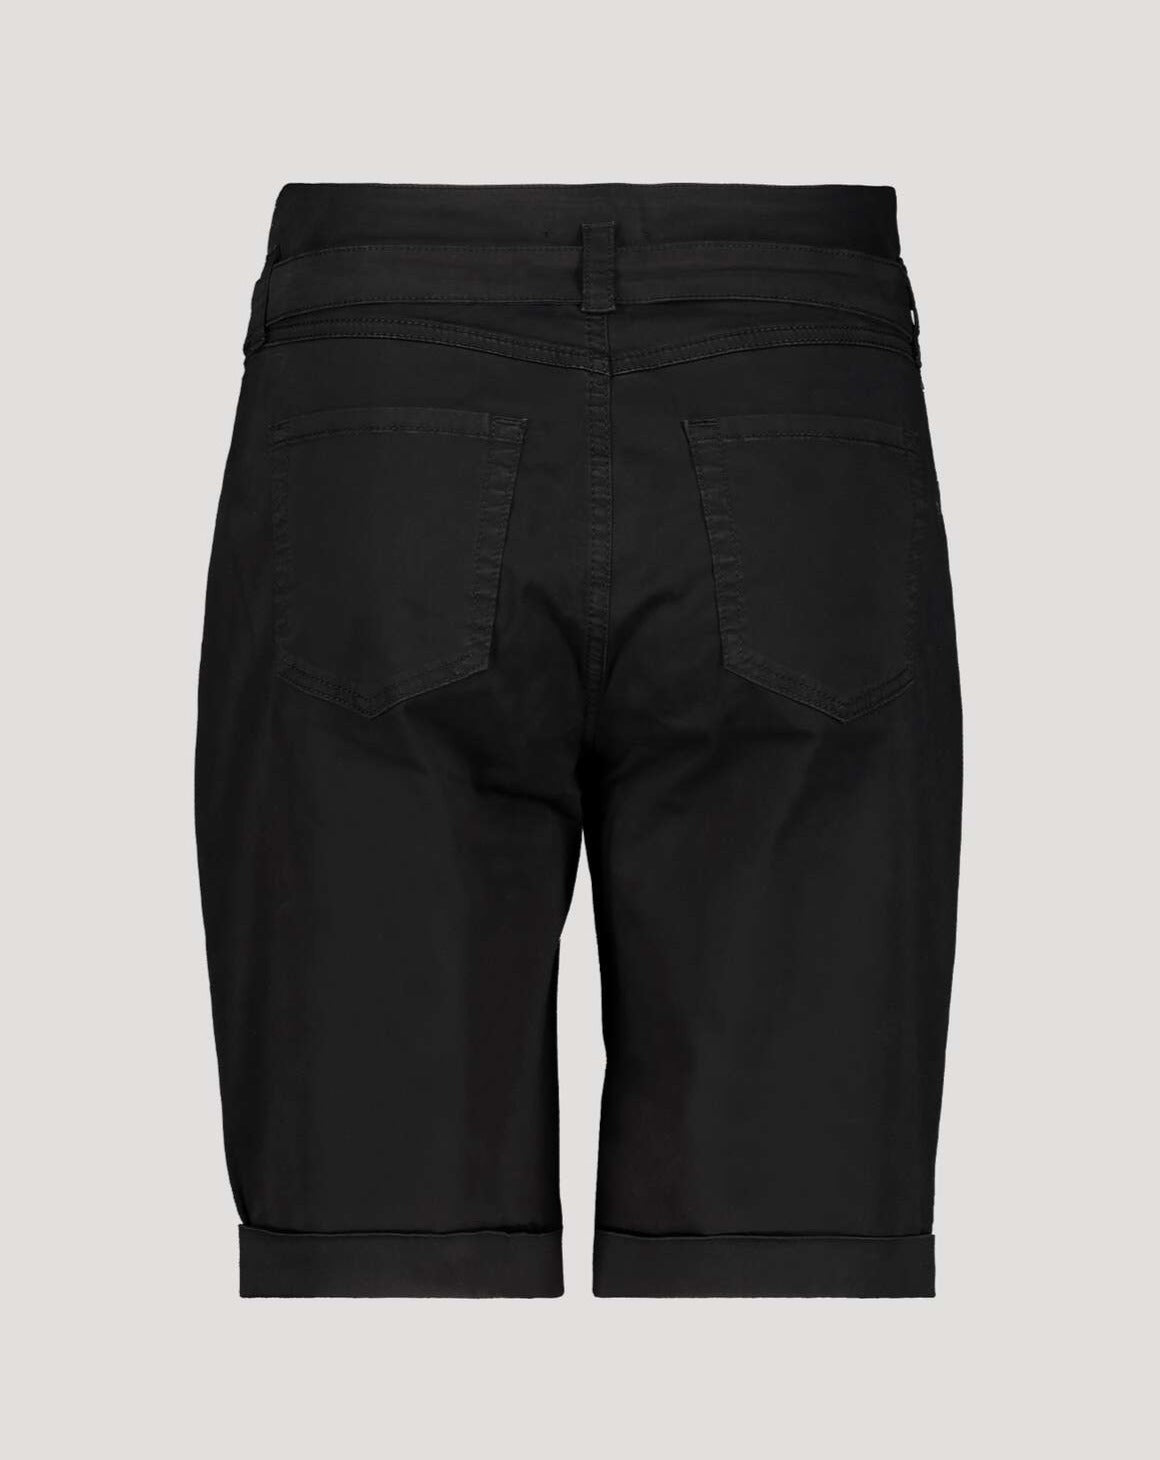 Monari Bermuda Shorts - Black